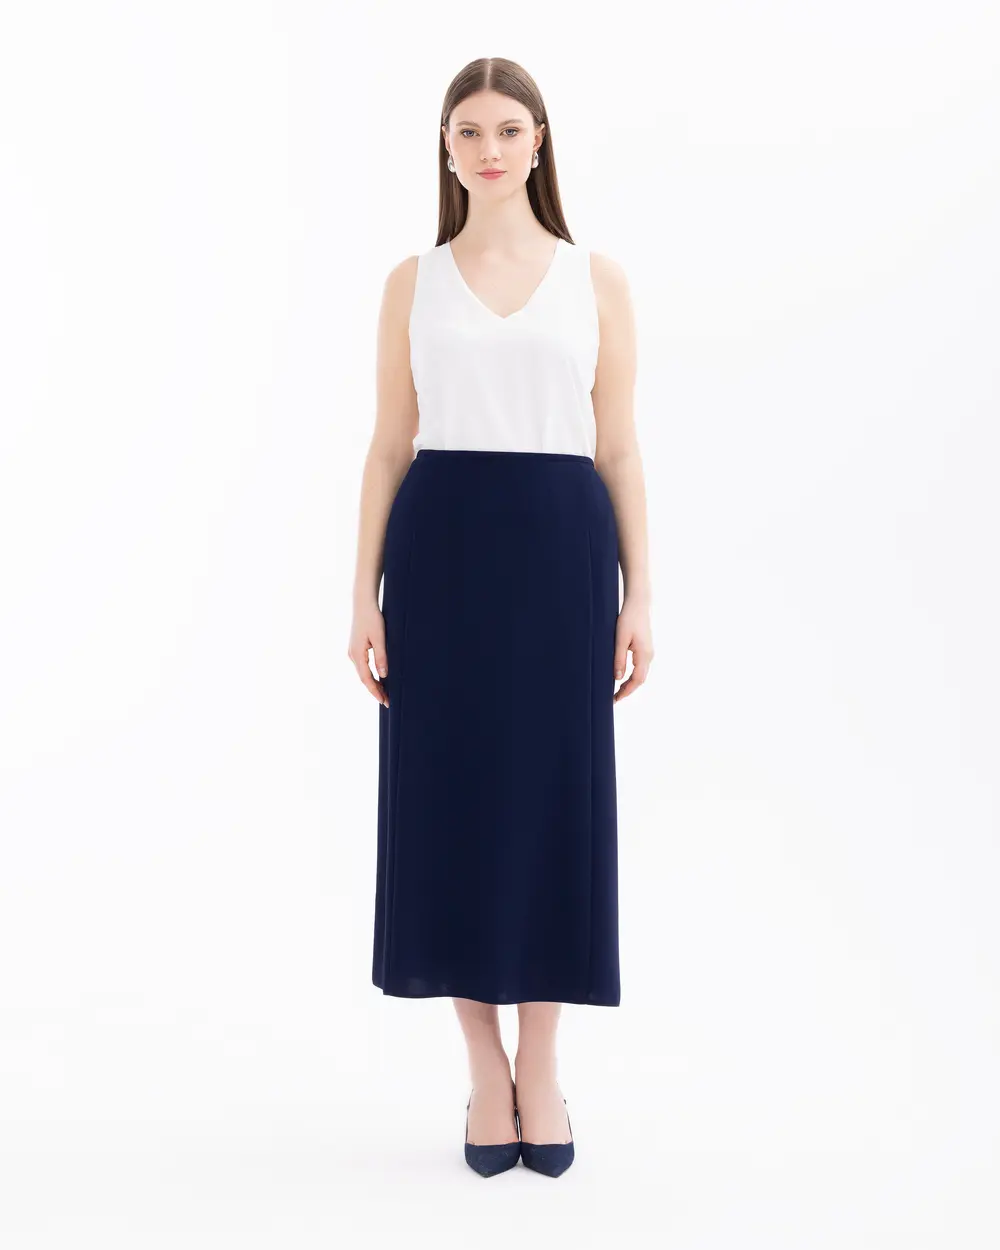 Plus Size Midi Length Classic Skirt